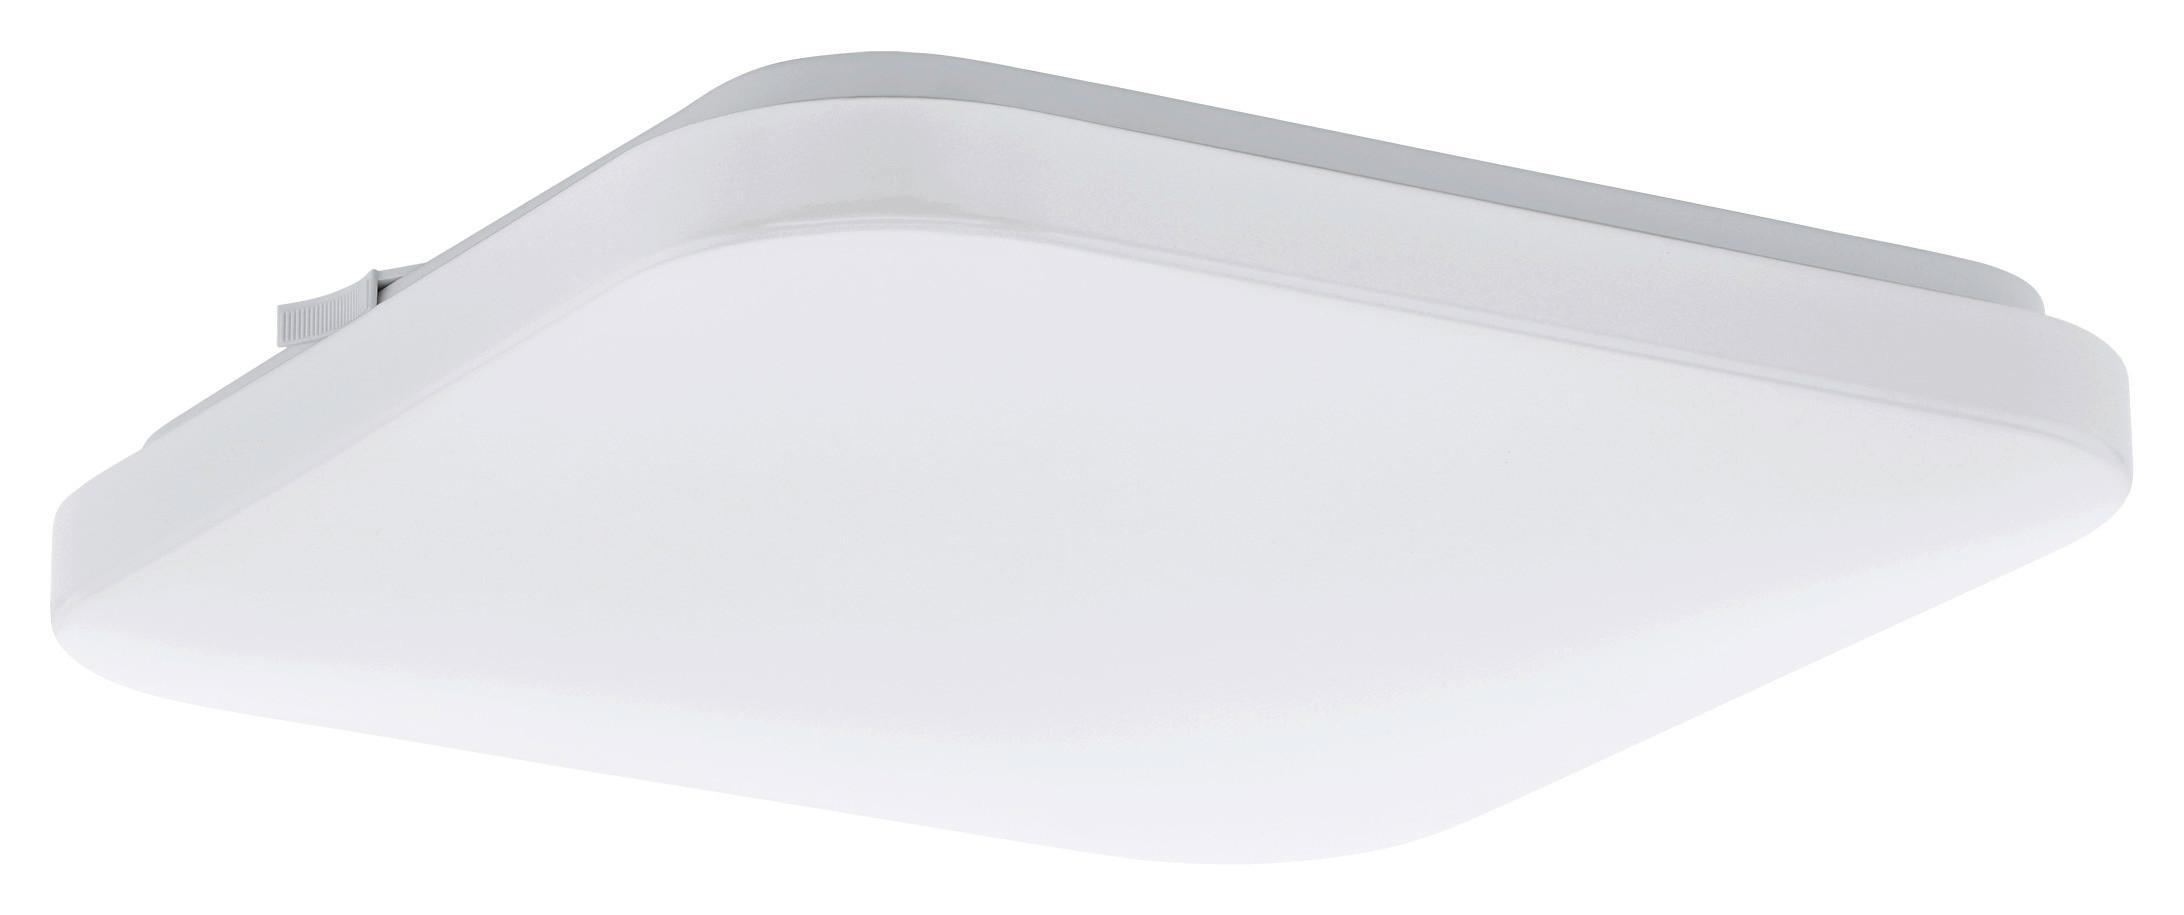 LED-Deckenleuchte Frania L: 28 cm - Weiß, MODERN, Kunststoff/Metall (28/28/7cm)